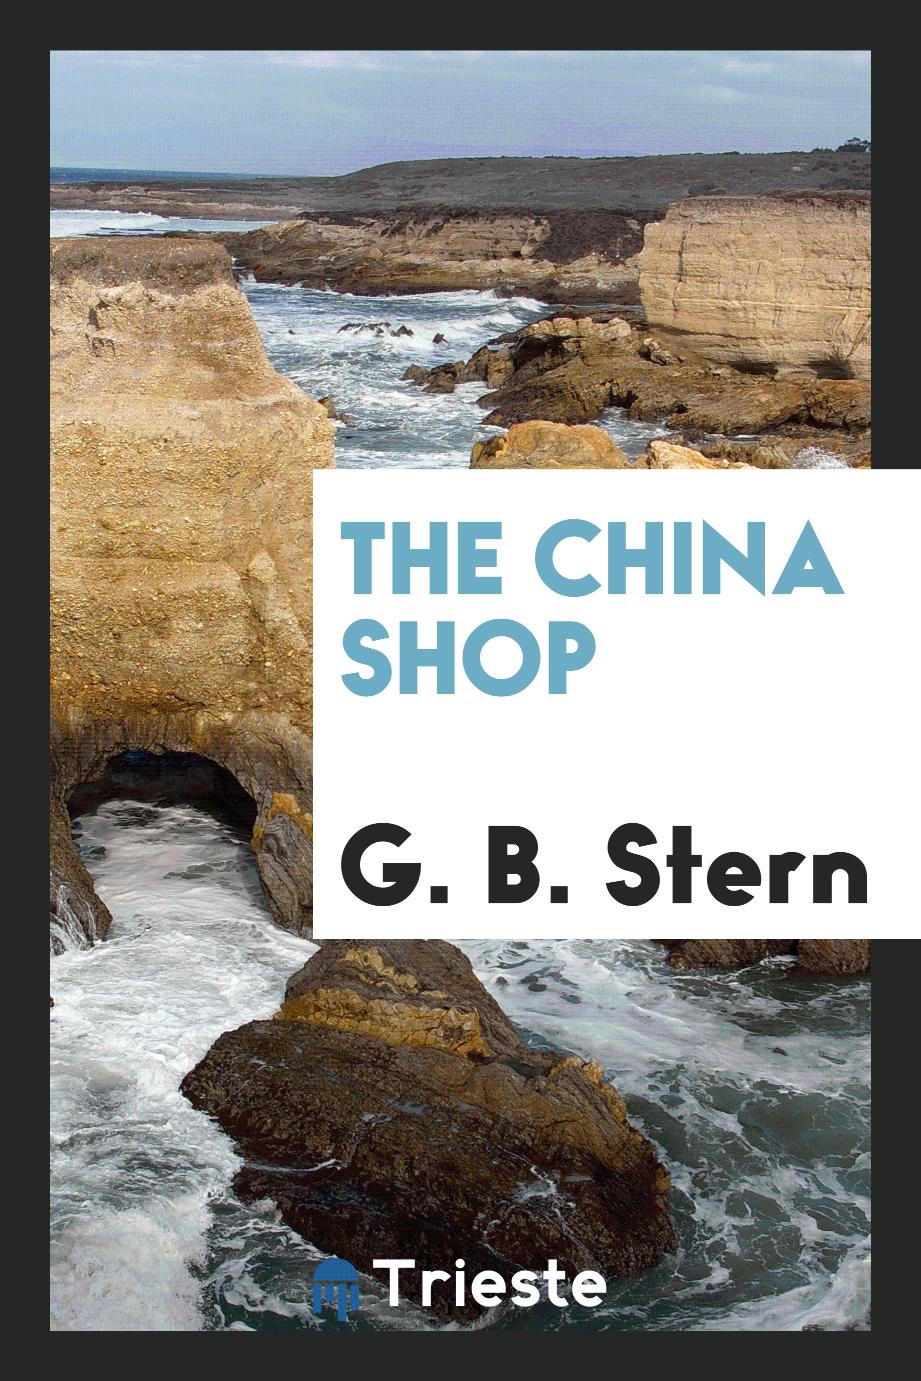 The china shop